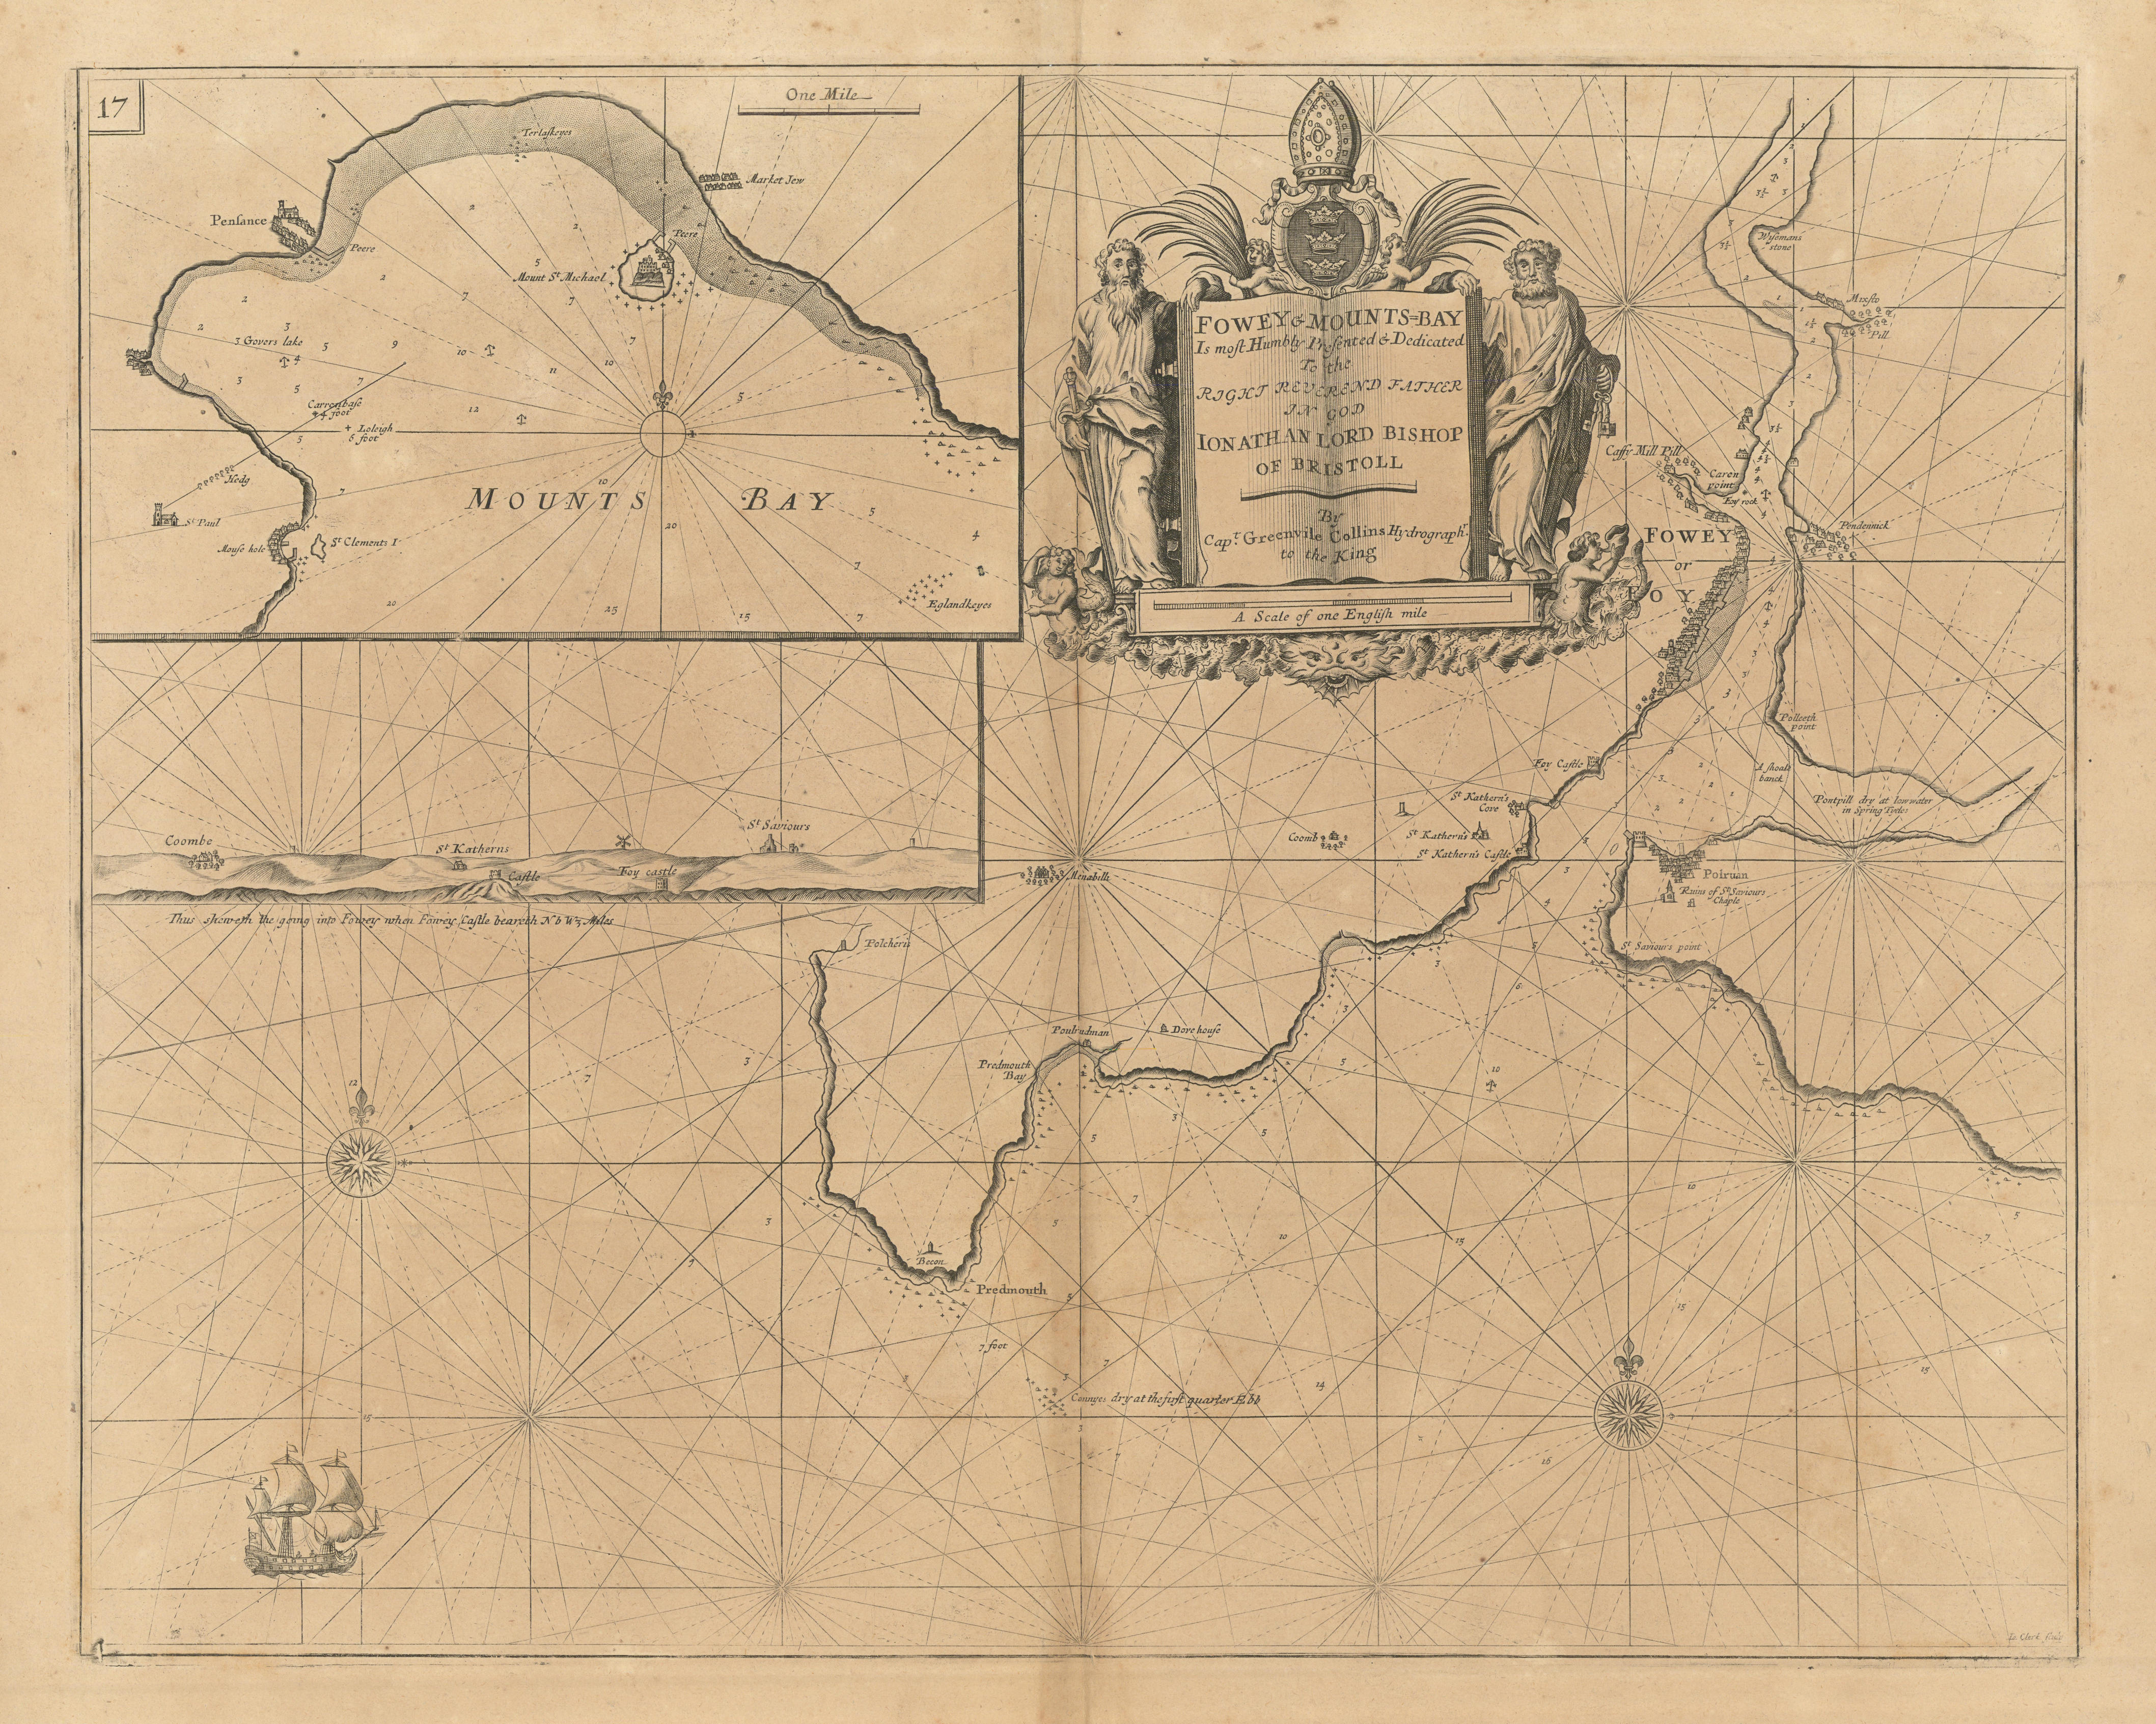 Associate Product FOWEY & MOUNTS BAY sea chart. Polruan Bodinnick Penzance. COLLINS 1693 old map